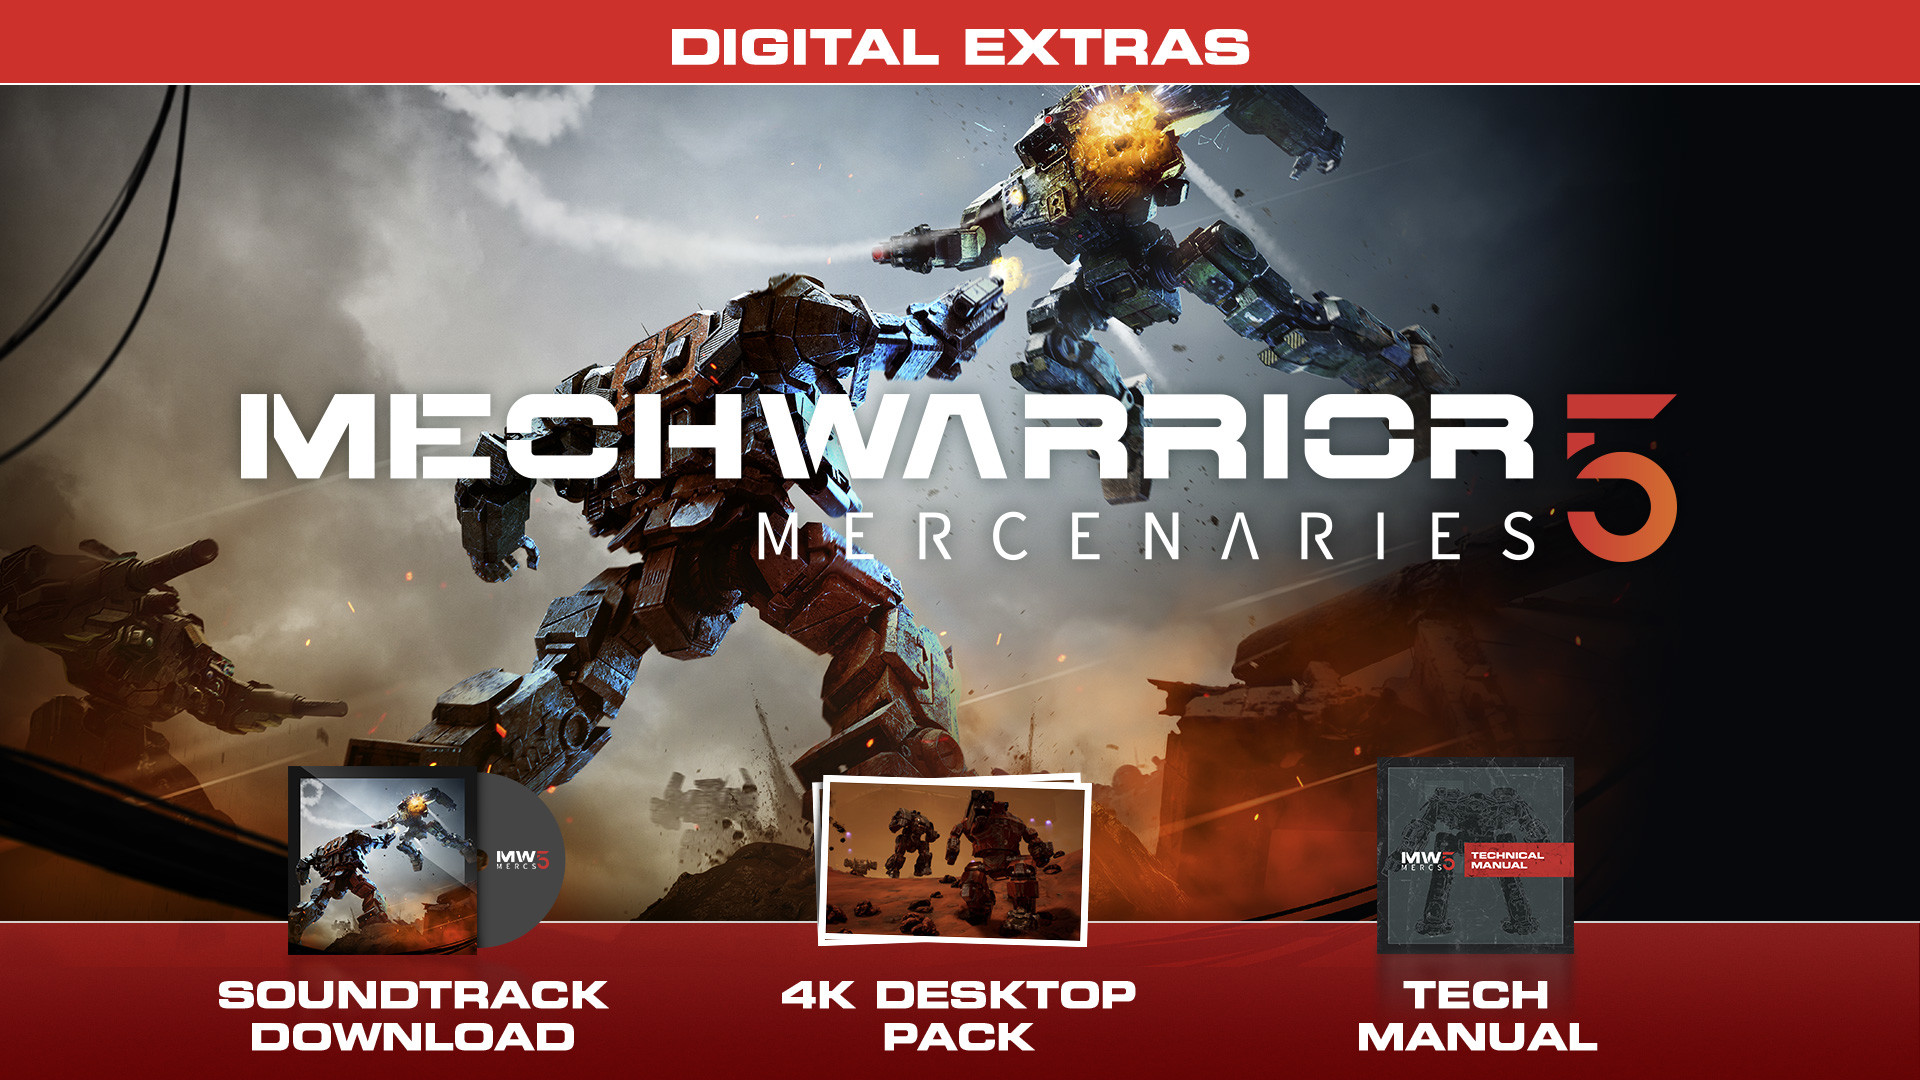 MechWarrior 5: Mercenaries - Digital Extras Content DLC Steam CD Key 7.89 $